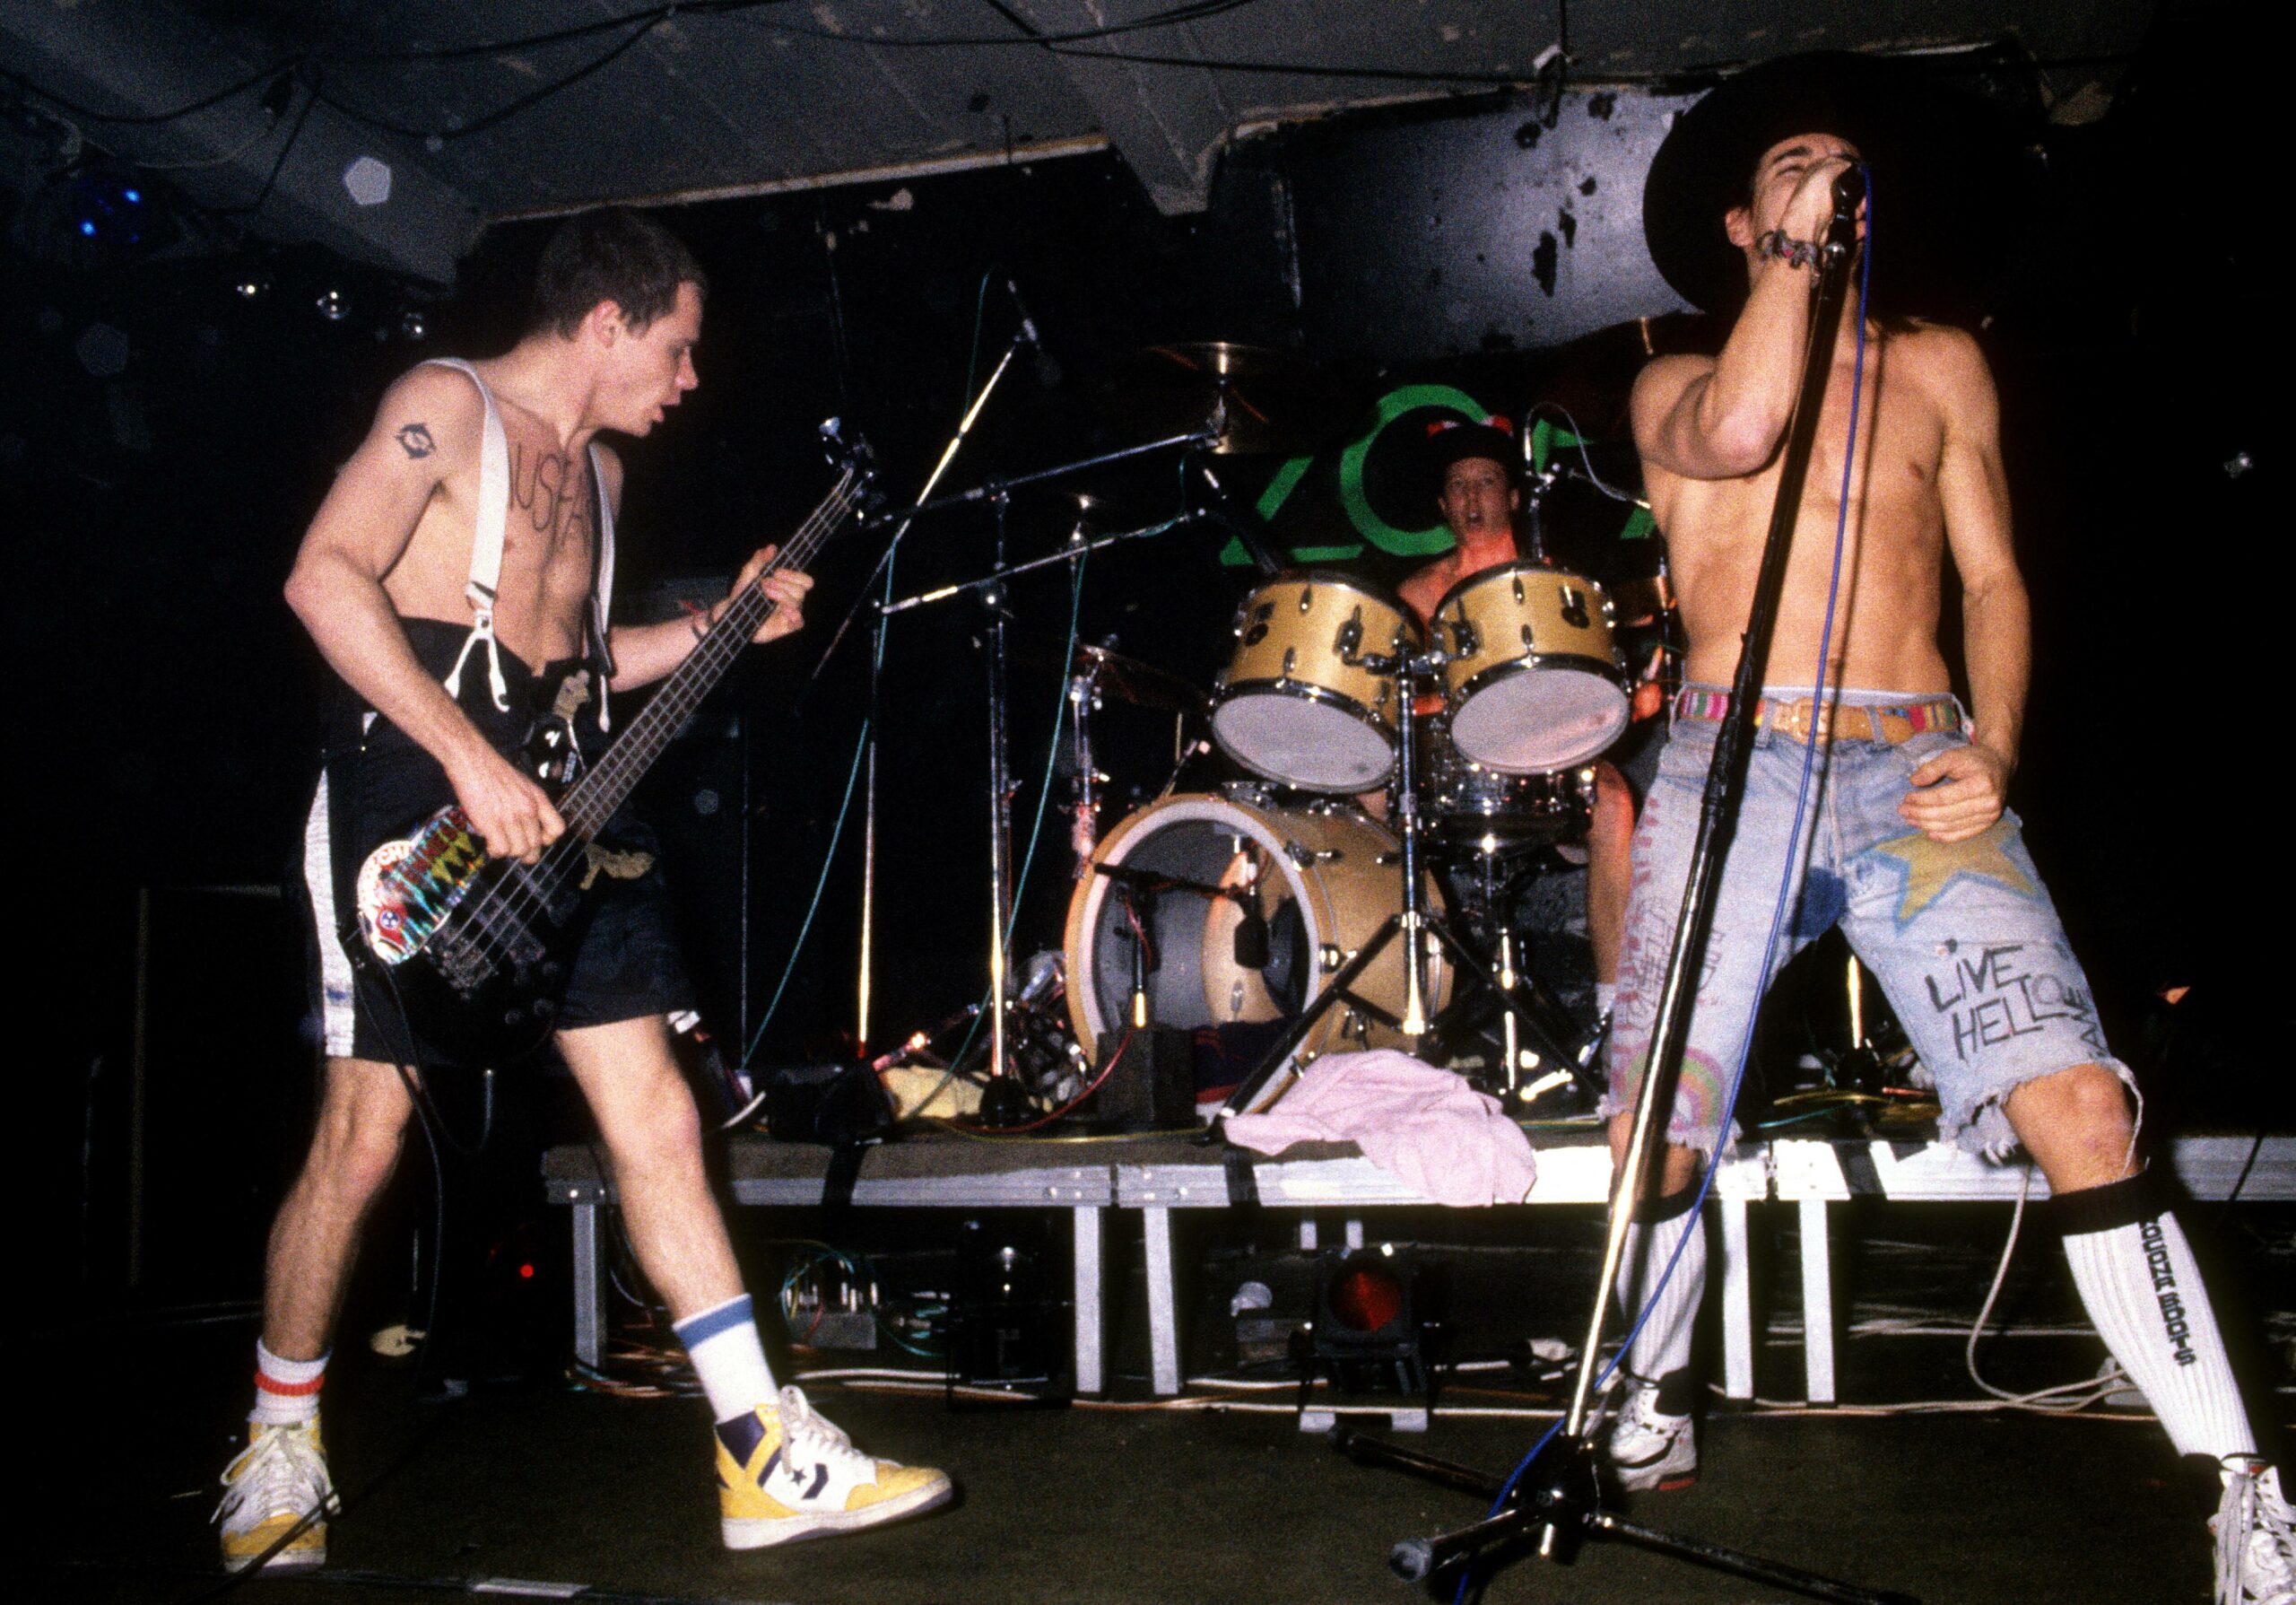 Red Hot Chili Peppers im Loft Berlin, v.li.: Michael Flea Balzary, Jack Irons, Anthony Kiedis, 5. Februar 1988. Foto: Imago/Brigani-Art